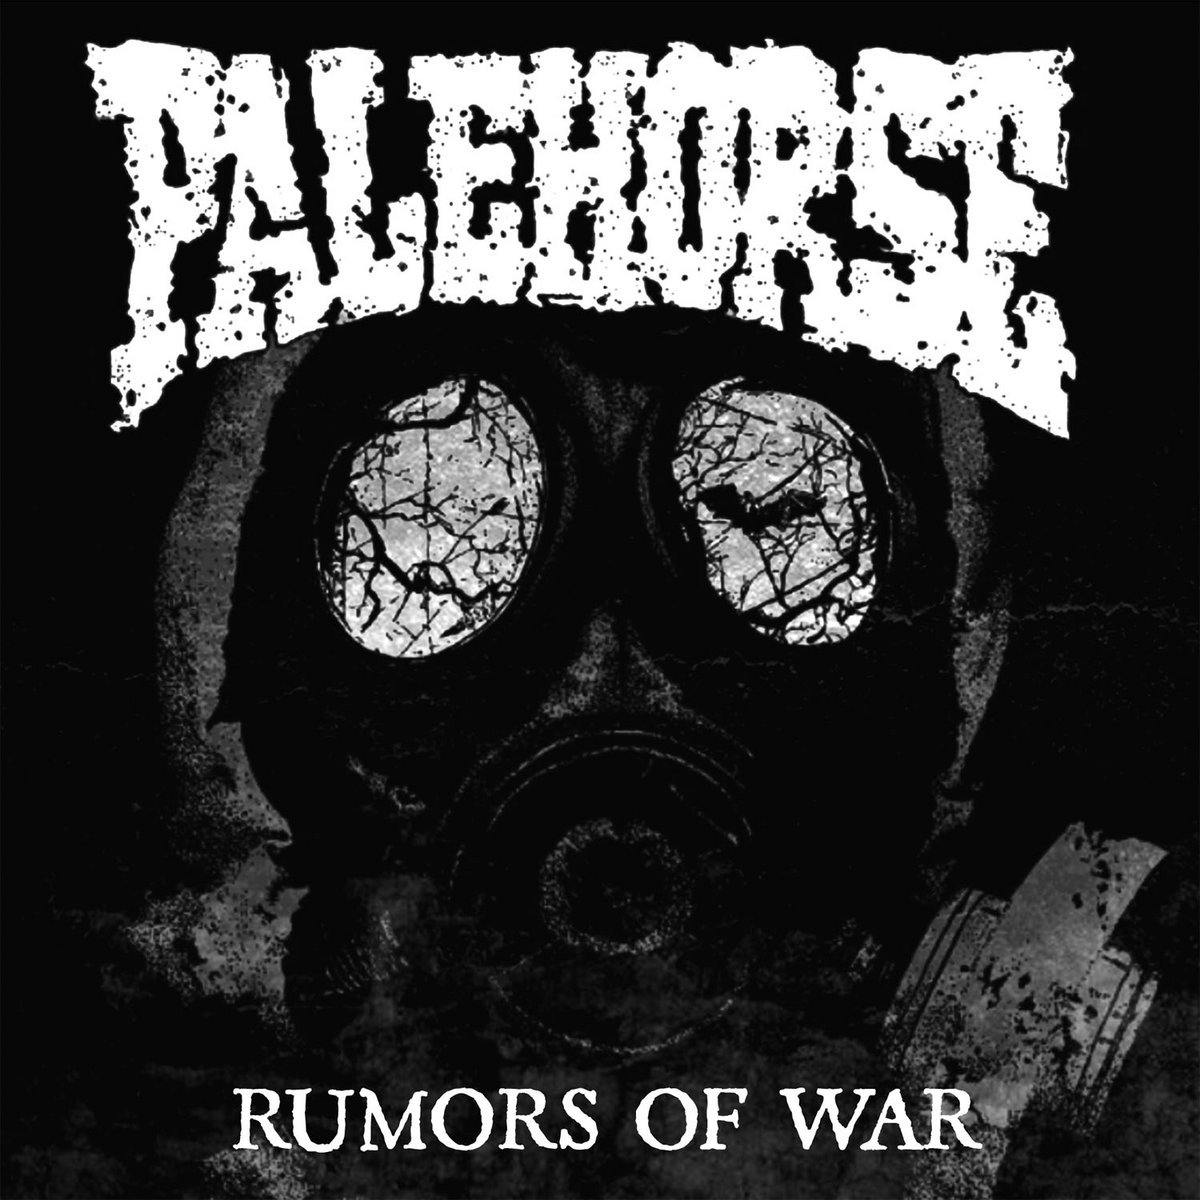 Buy – Palehorse "Rumors of War" 7" – Band & Music Merch – Cold Cuts Merch